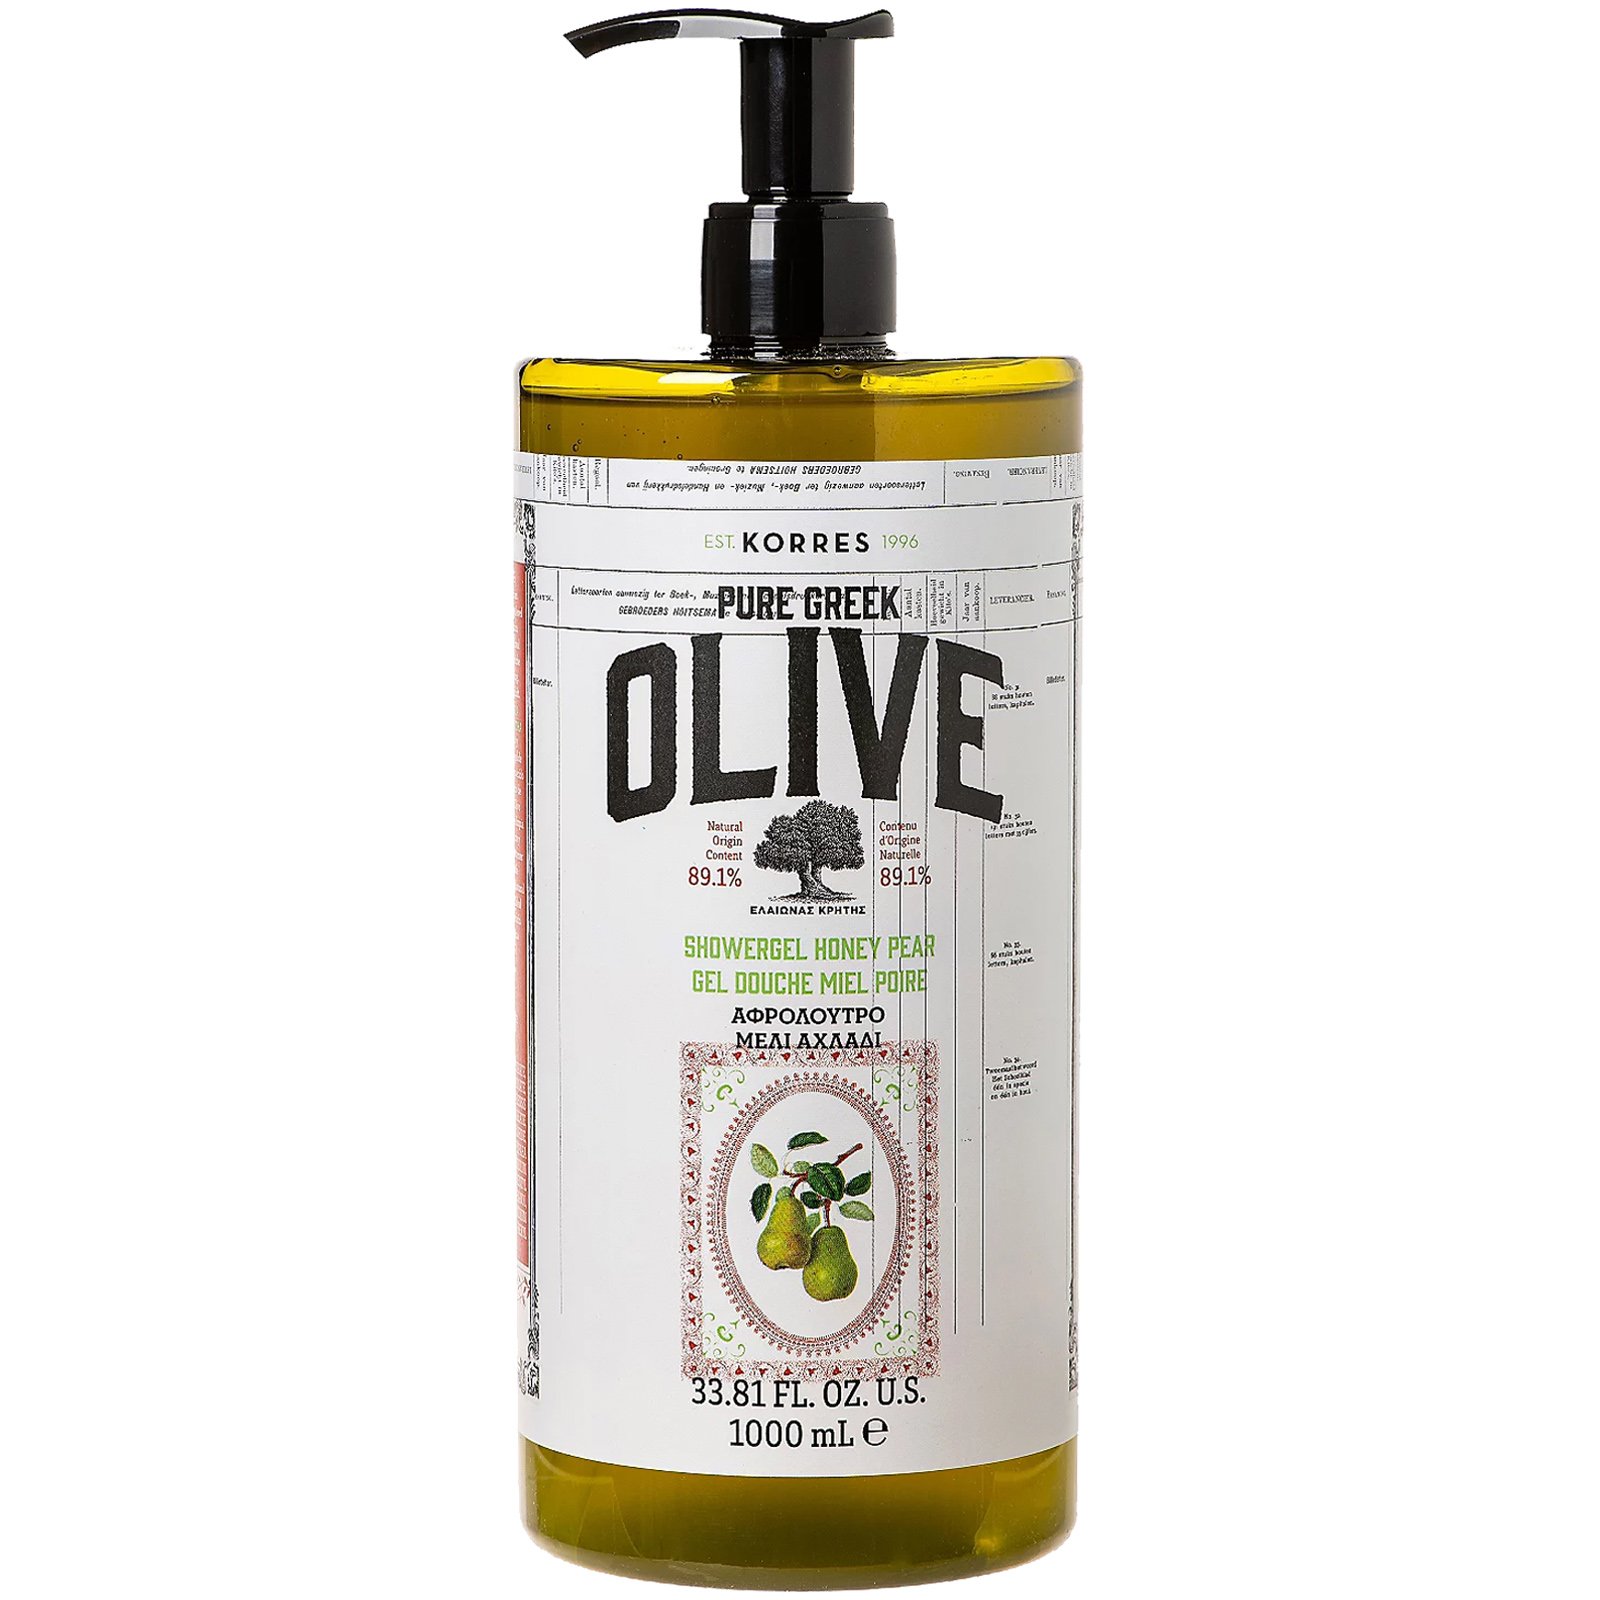 Korres Pure Greek Olive Showergel Honey Pear Αφρόλουτρο με Τονωτικό Εκχύλισμα Φύλλων Ελιάς & Άρωμα Μέλι Αχλάδι 1000ml